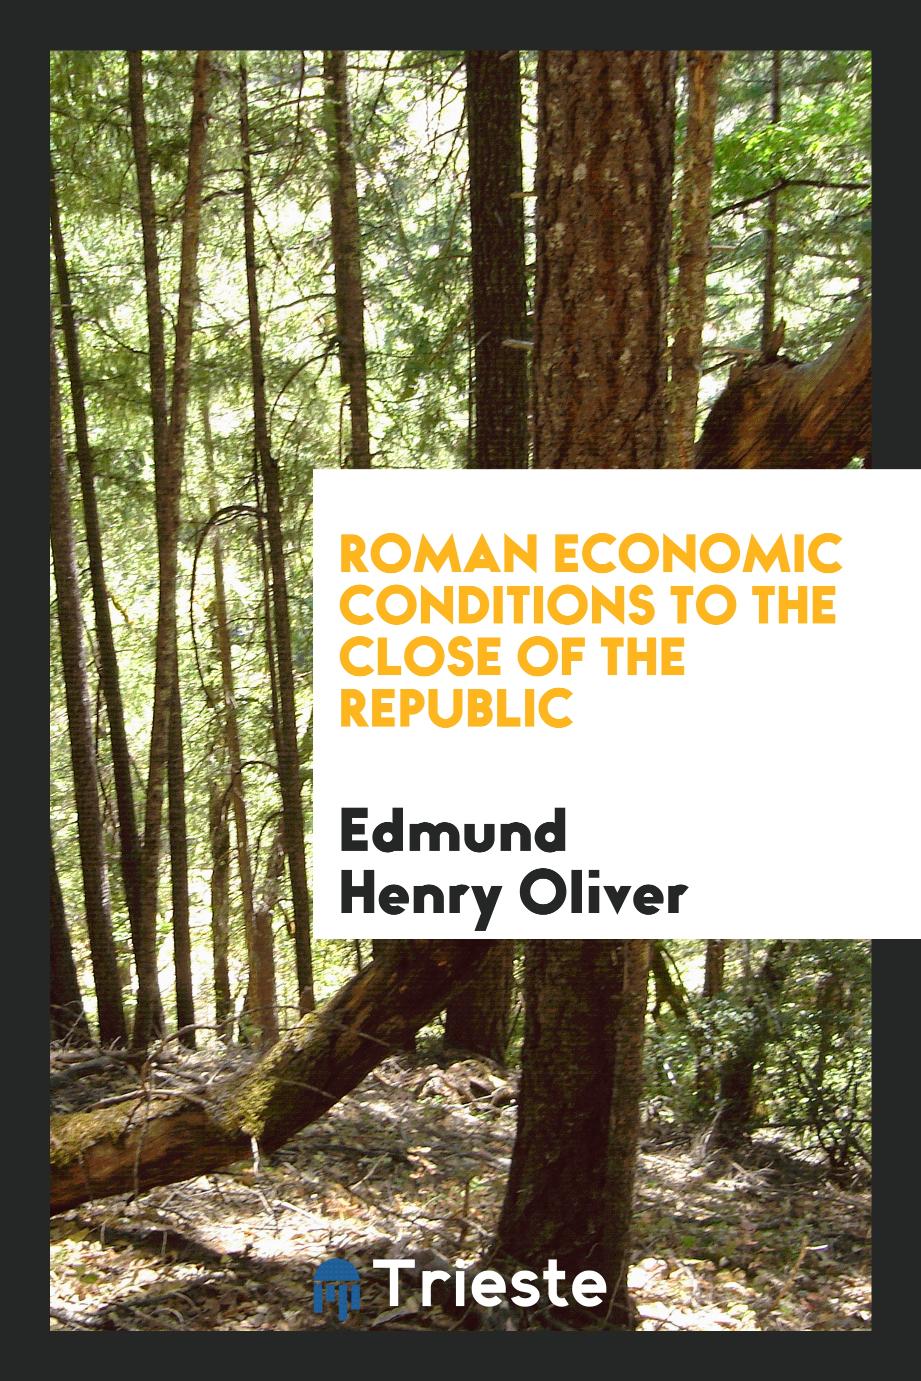 Roman economic conditions to the close of the republic